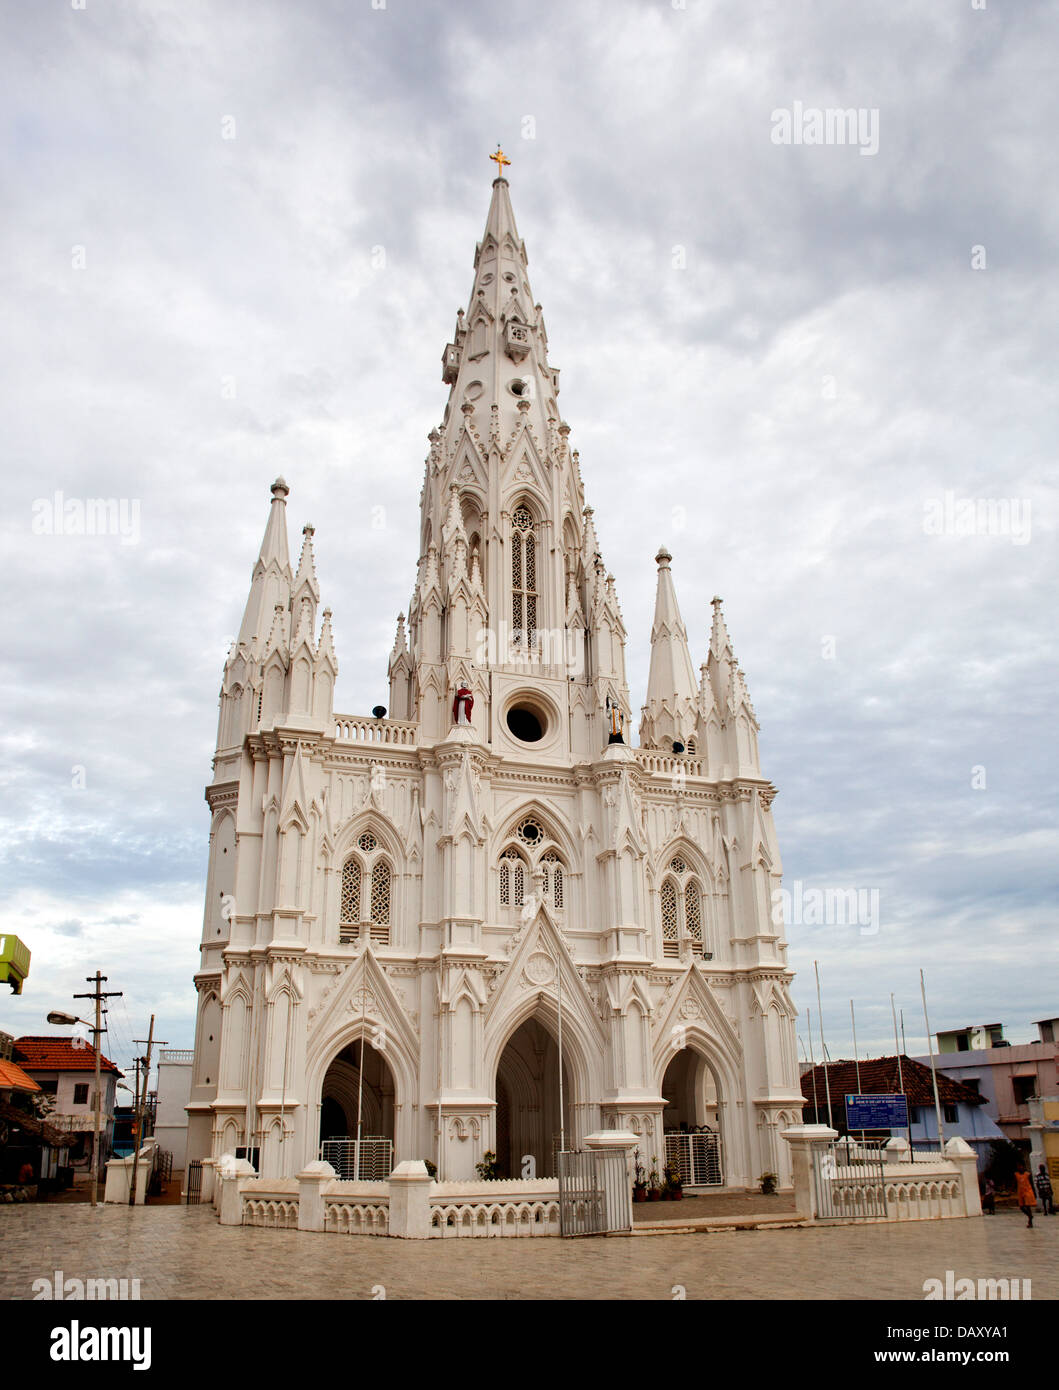 Facade of a church, Our Lady of Ransom Church, Kanyakumari, Tamil Nadu, India Stock Photo